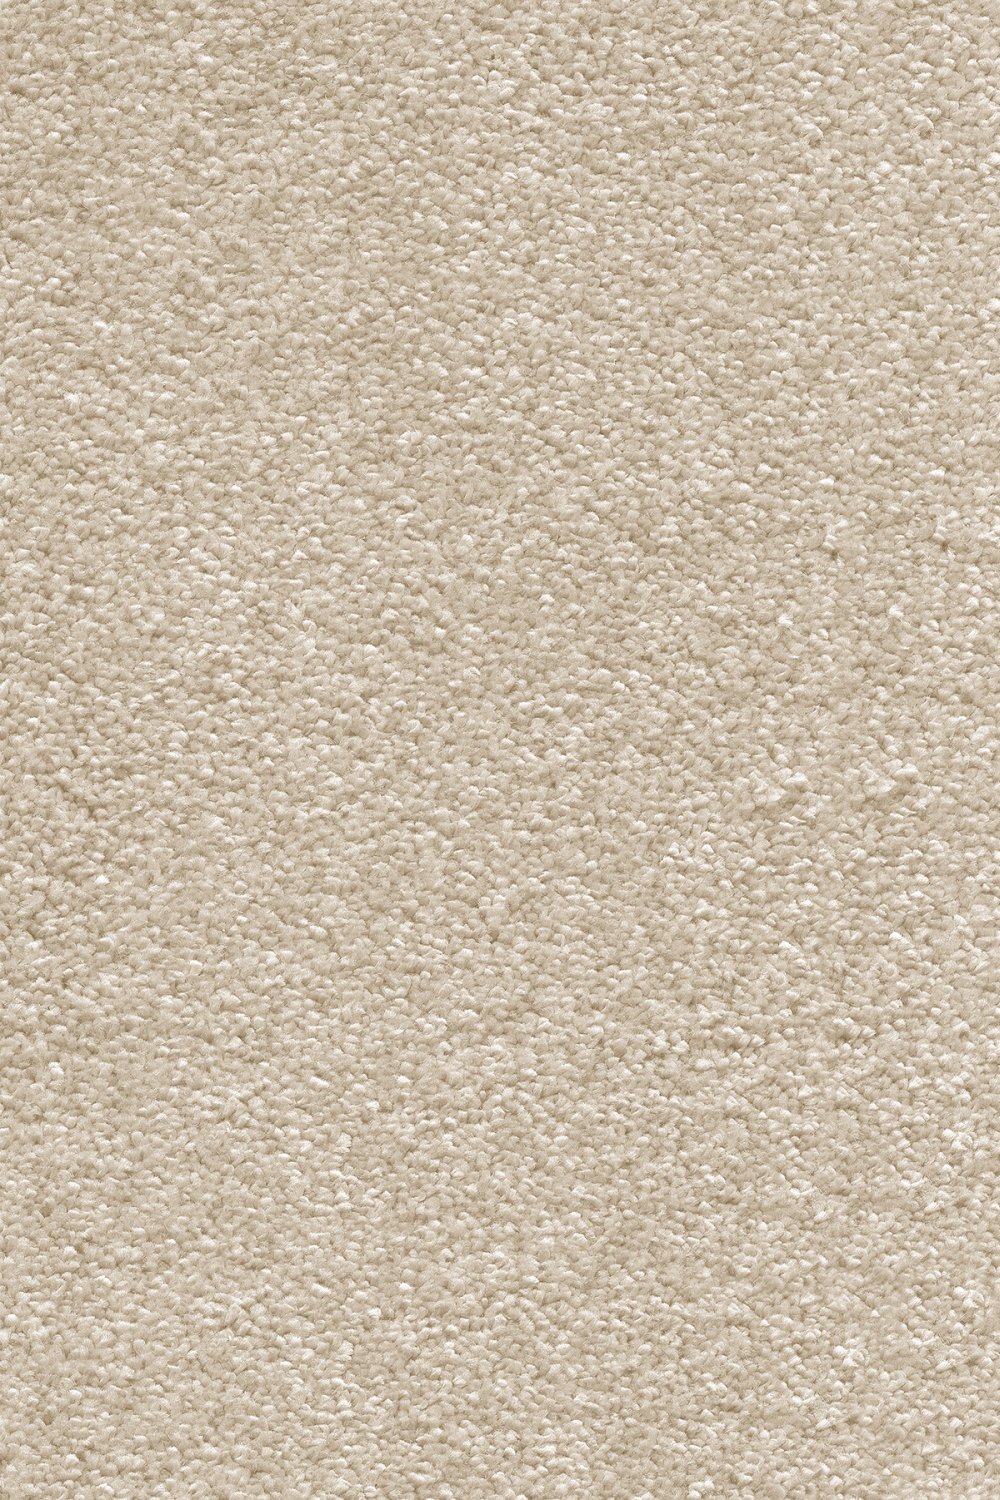 Stockholm Plains Saxony Carpet - Latte 36